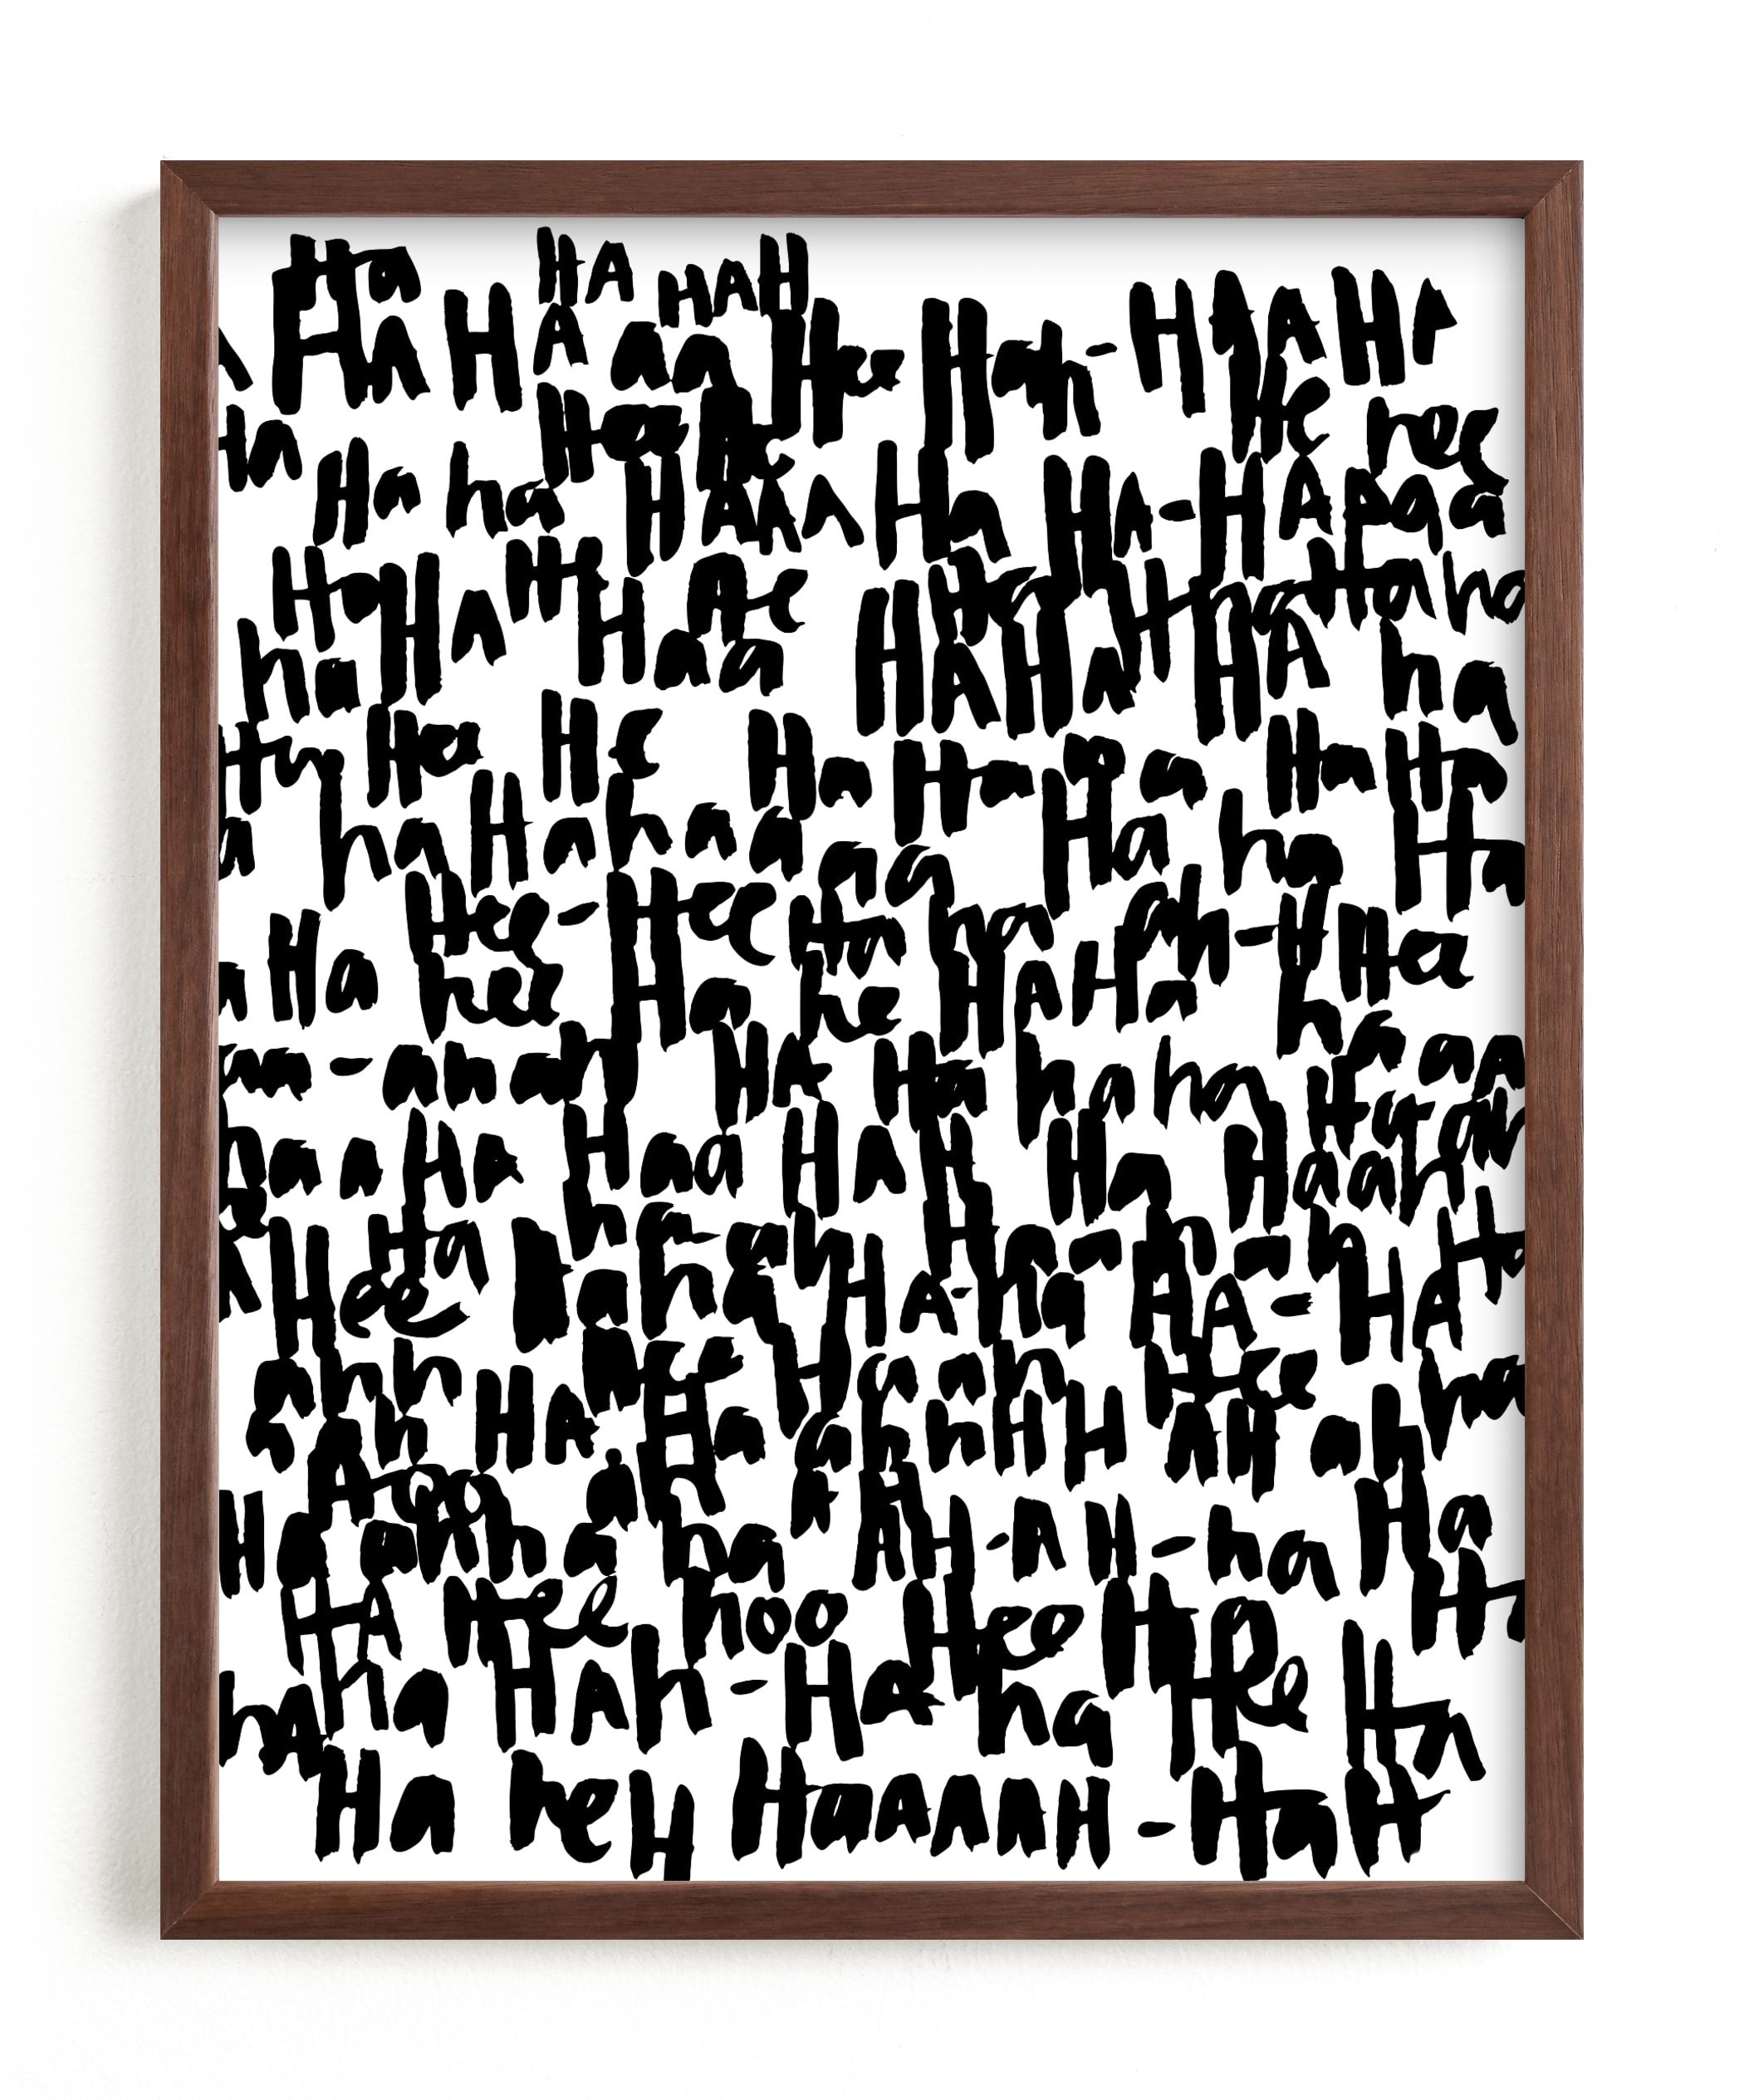 "HA-HA-HA-HA" - Graphic Limited Edition Art Print by Kate Roebuck. | Minted